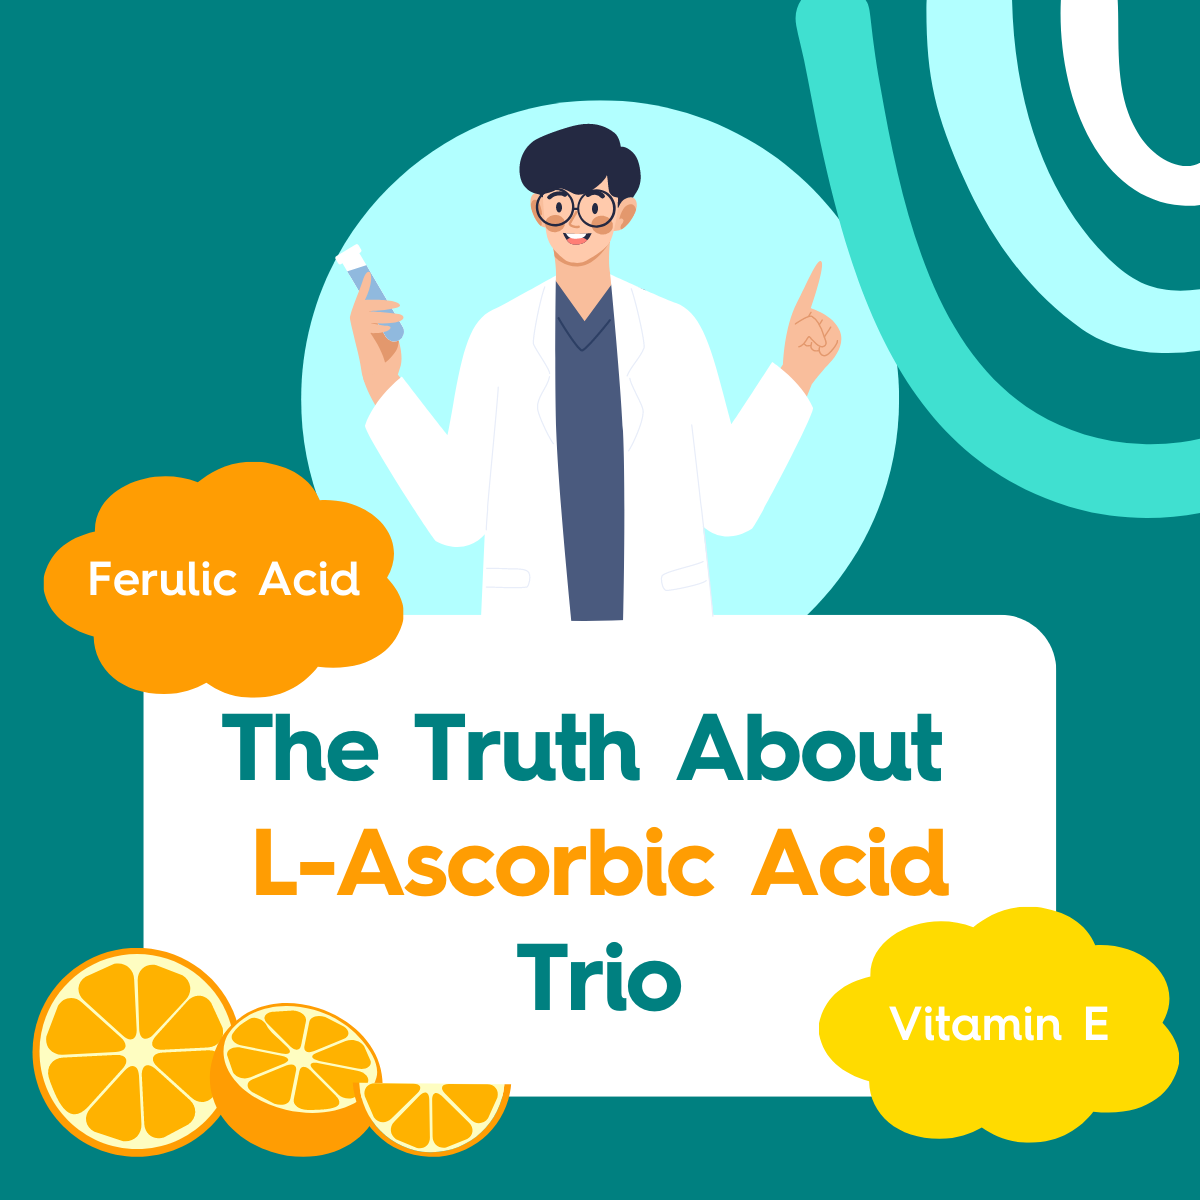 The Truth About L-Ascorbic Acid Trio